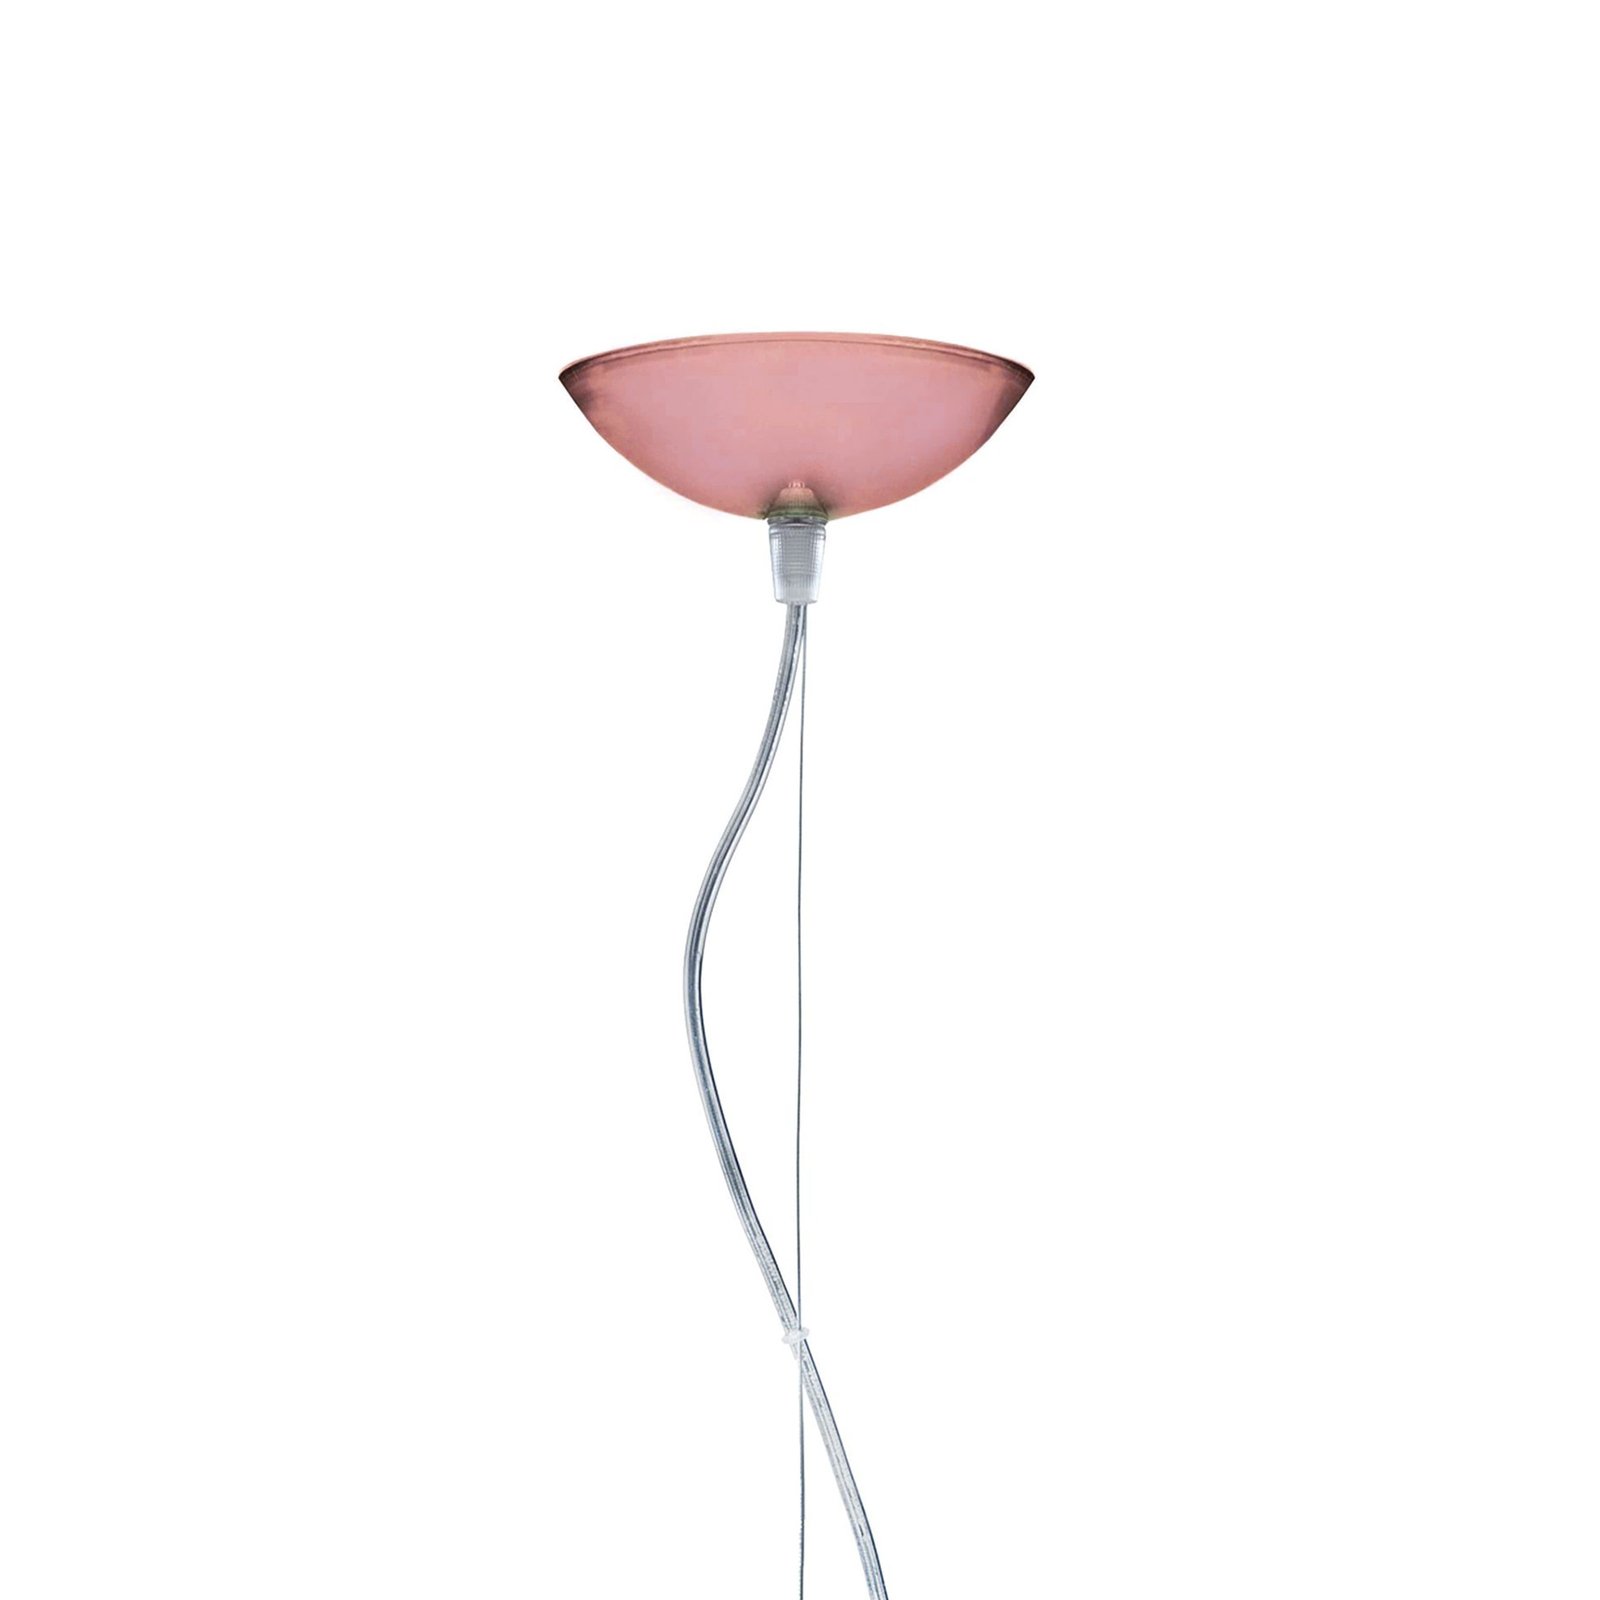 Kartell FL/Y hanglamp, Ø 52 cm, bordeauxrood